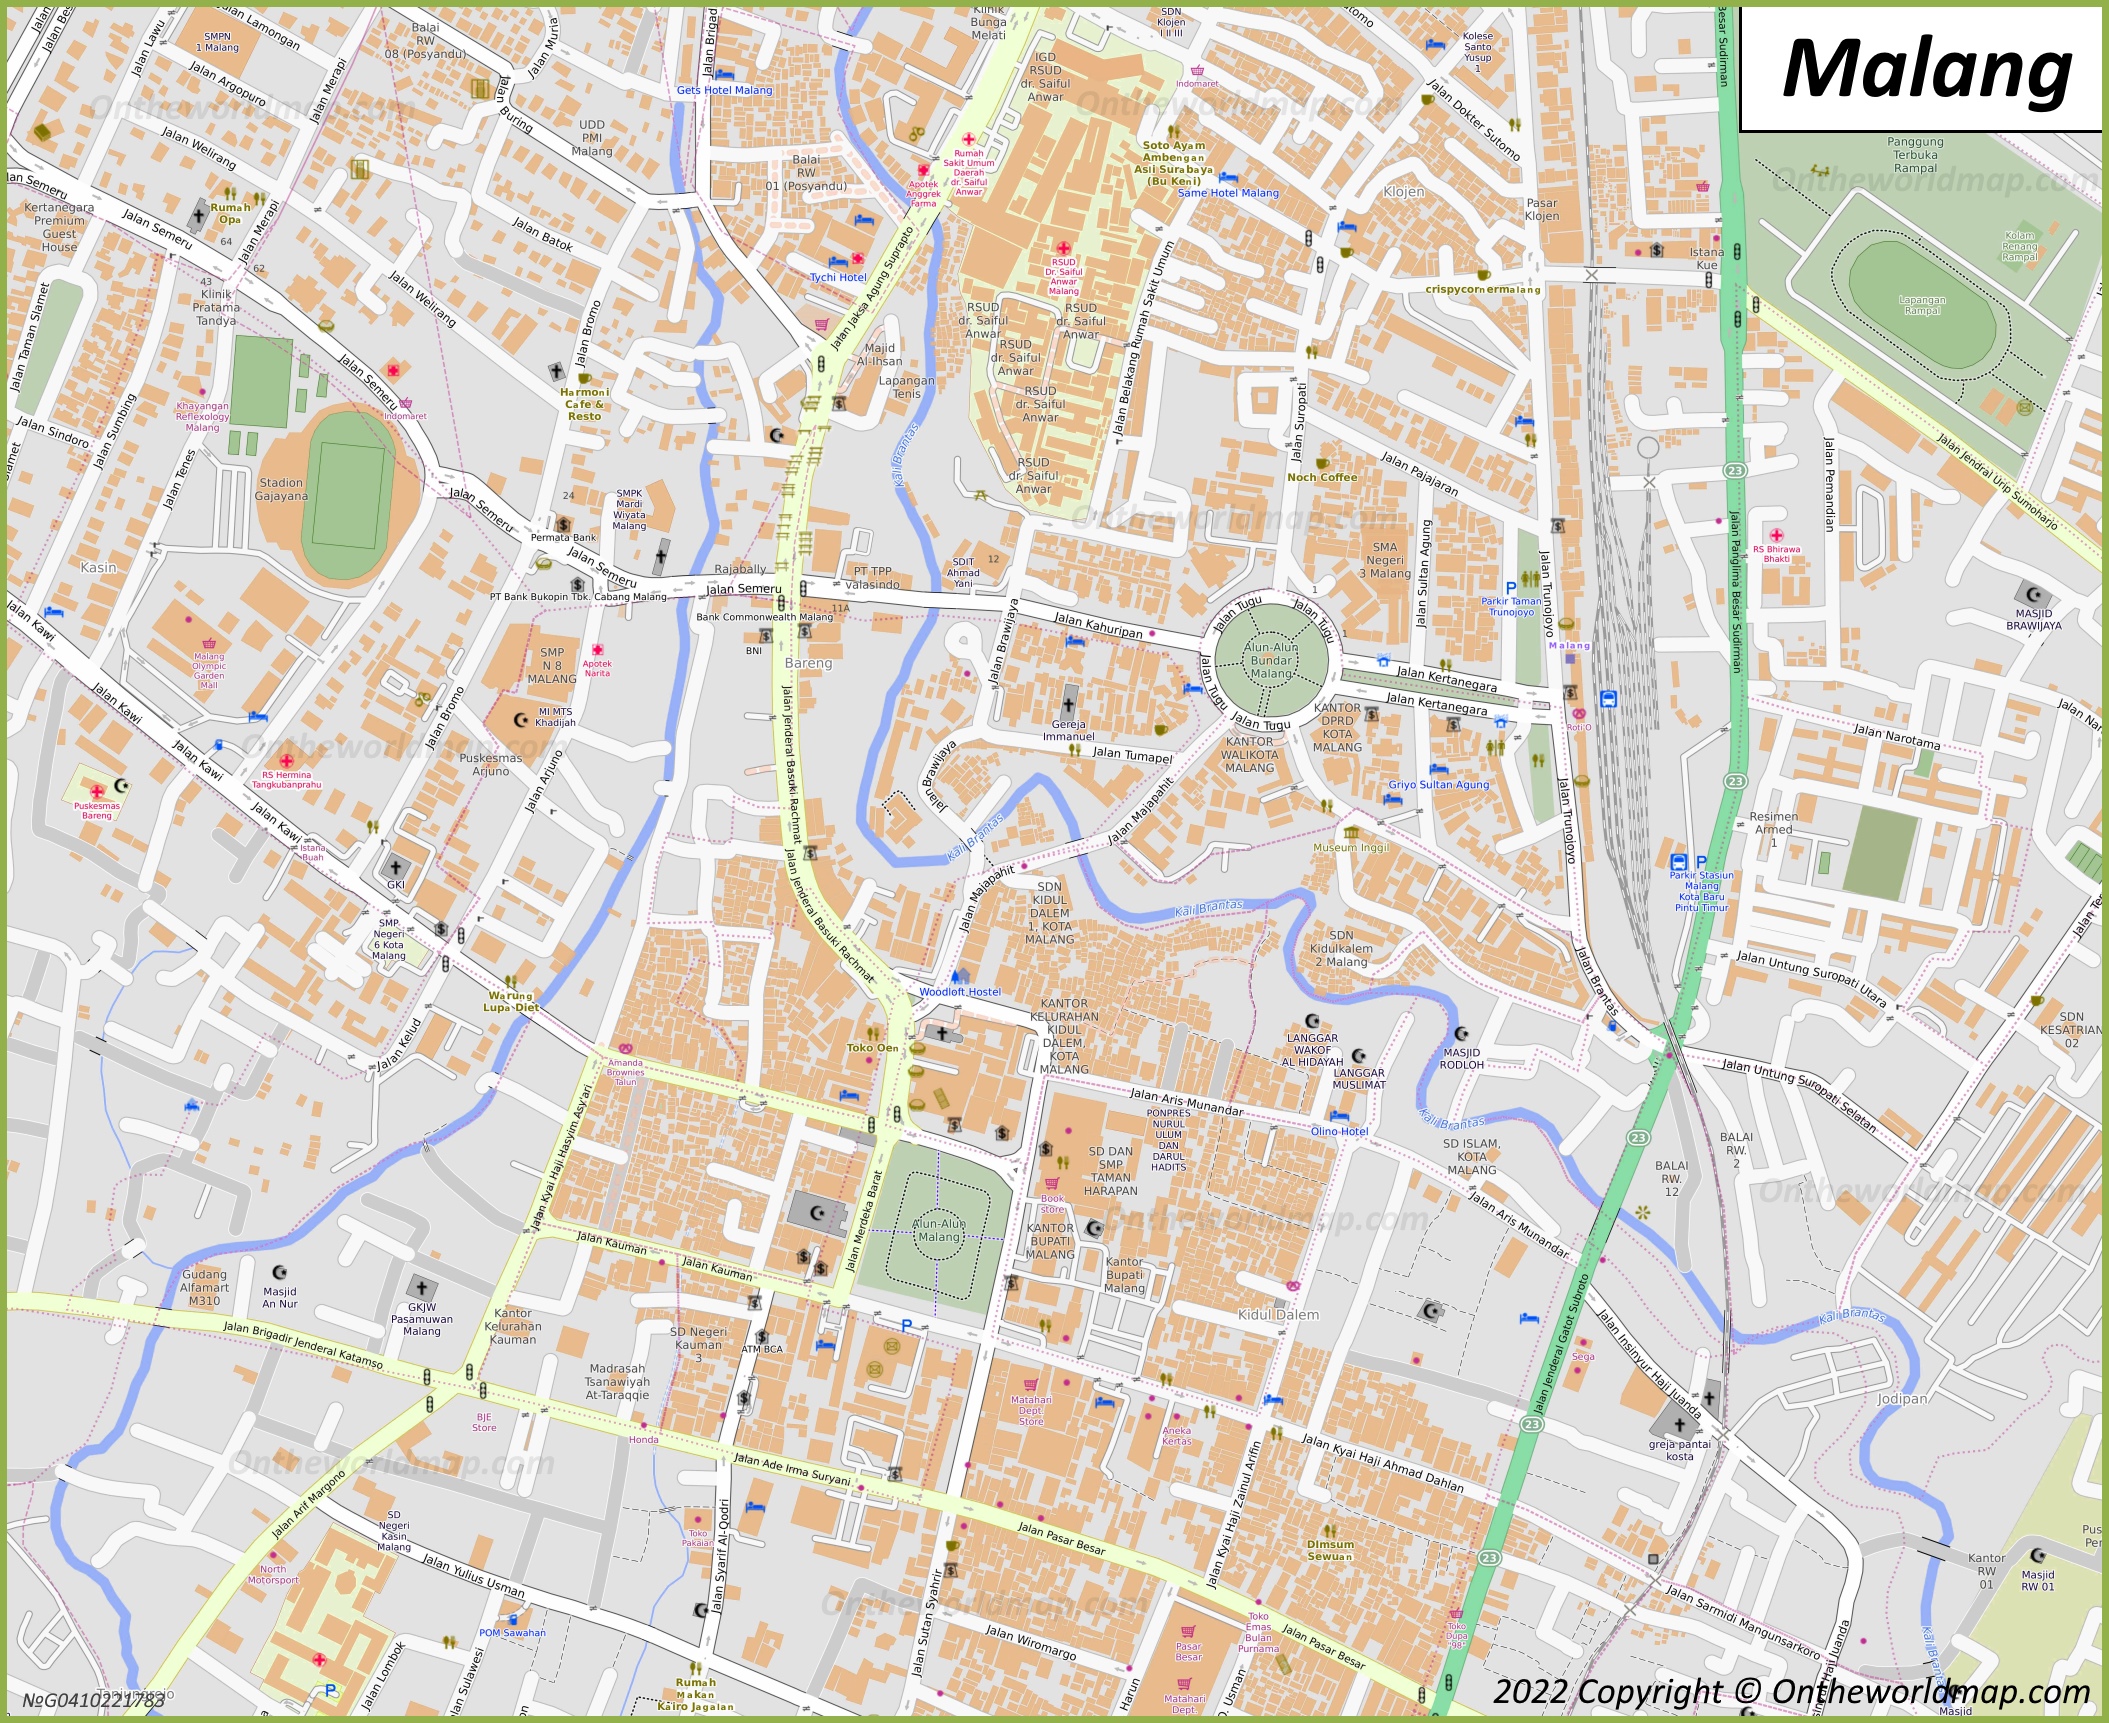 Malang City Centre Map